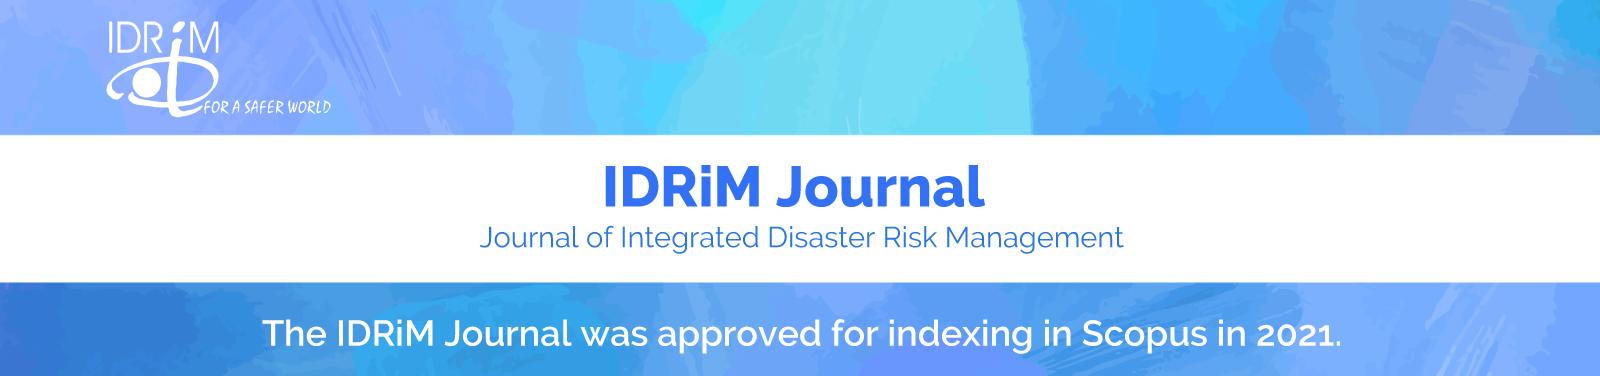 IDRiM-Journal